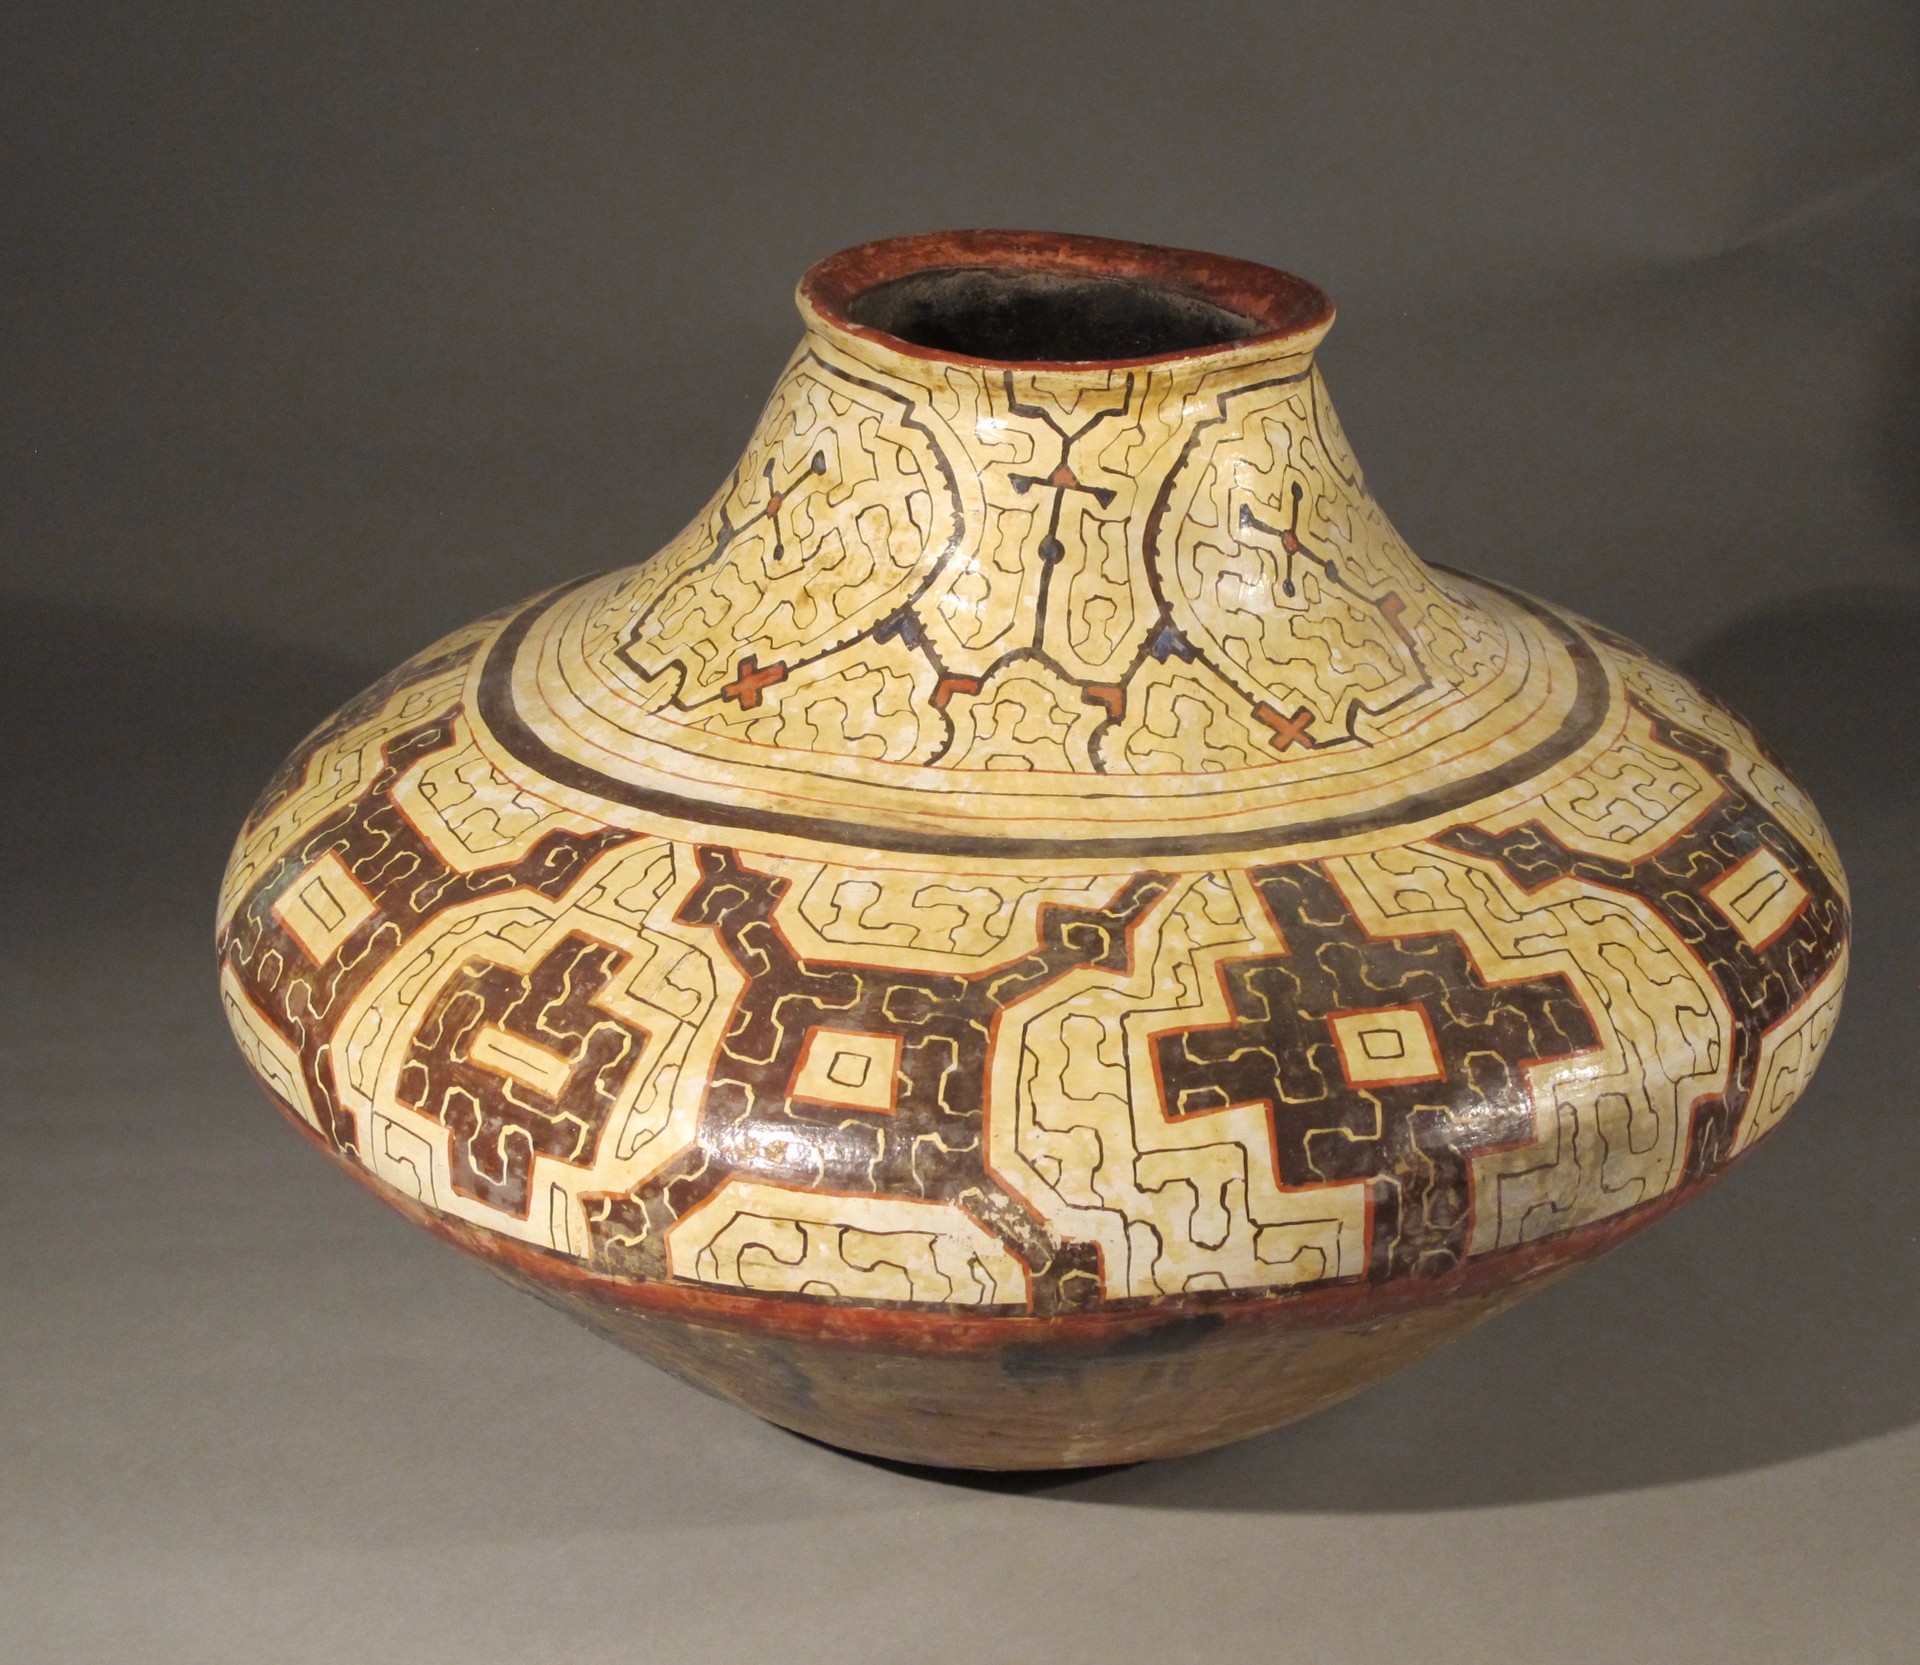 Shibipo Geometric pot by Amazon Pottery